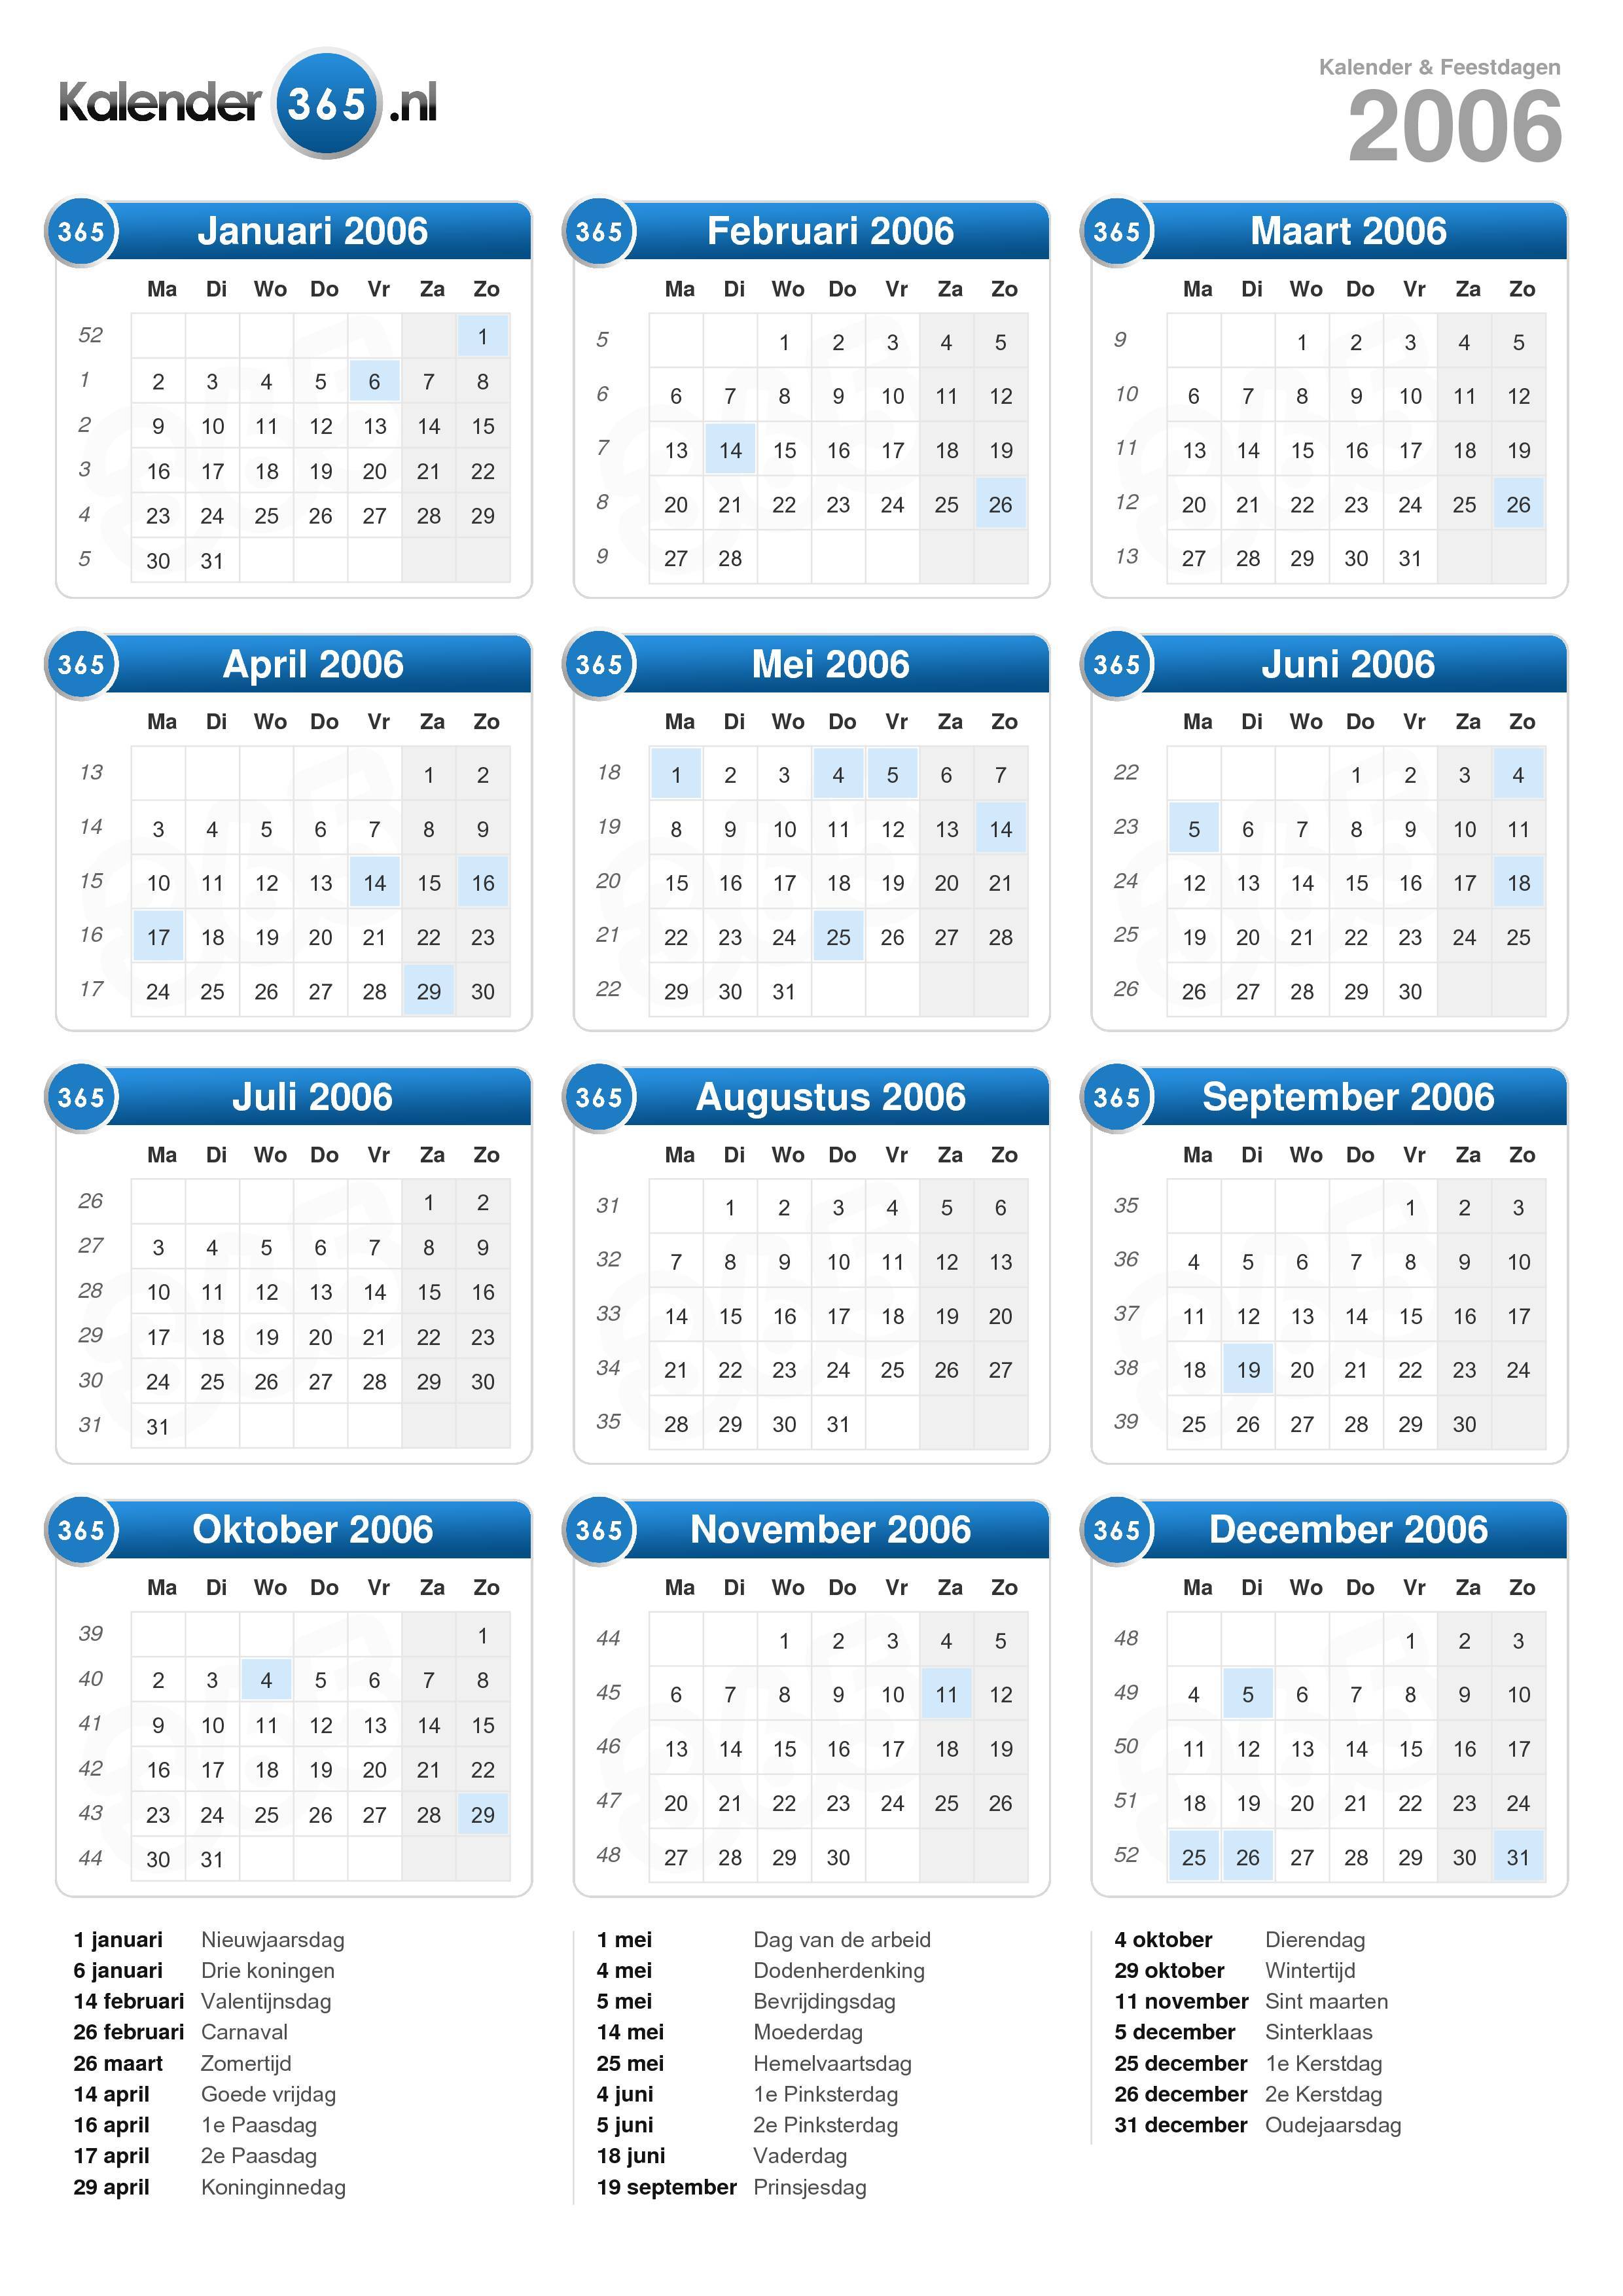 Kalender 2006 lengkap dengan weton